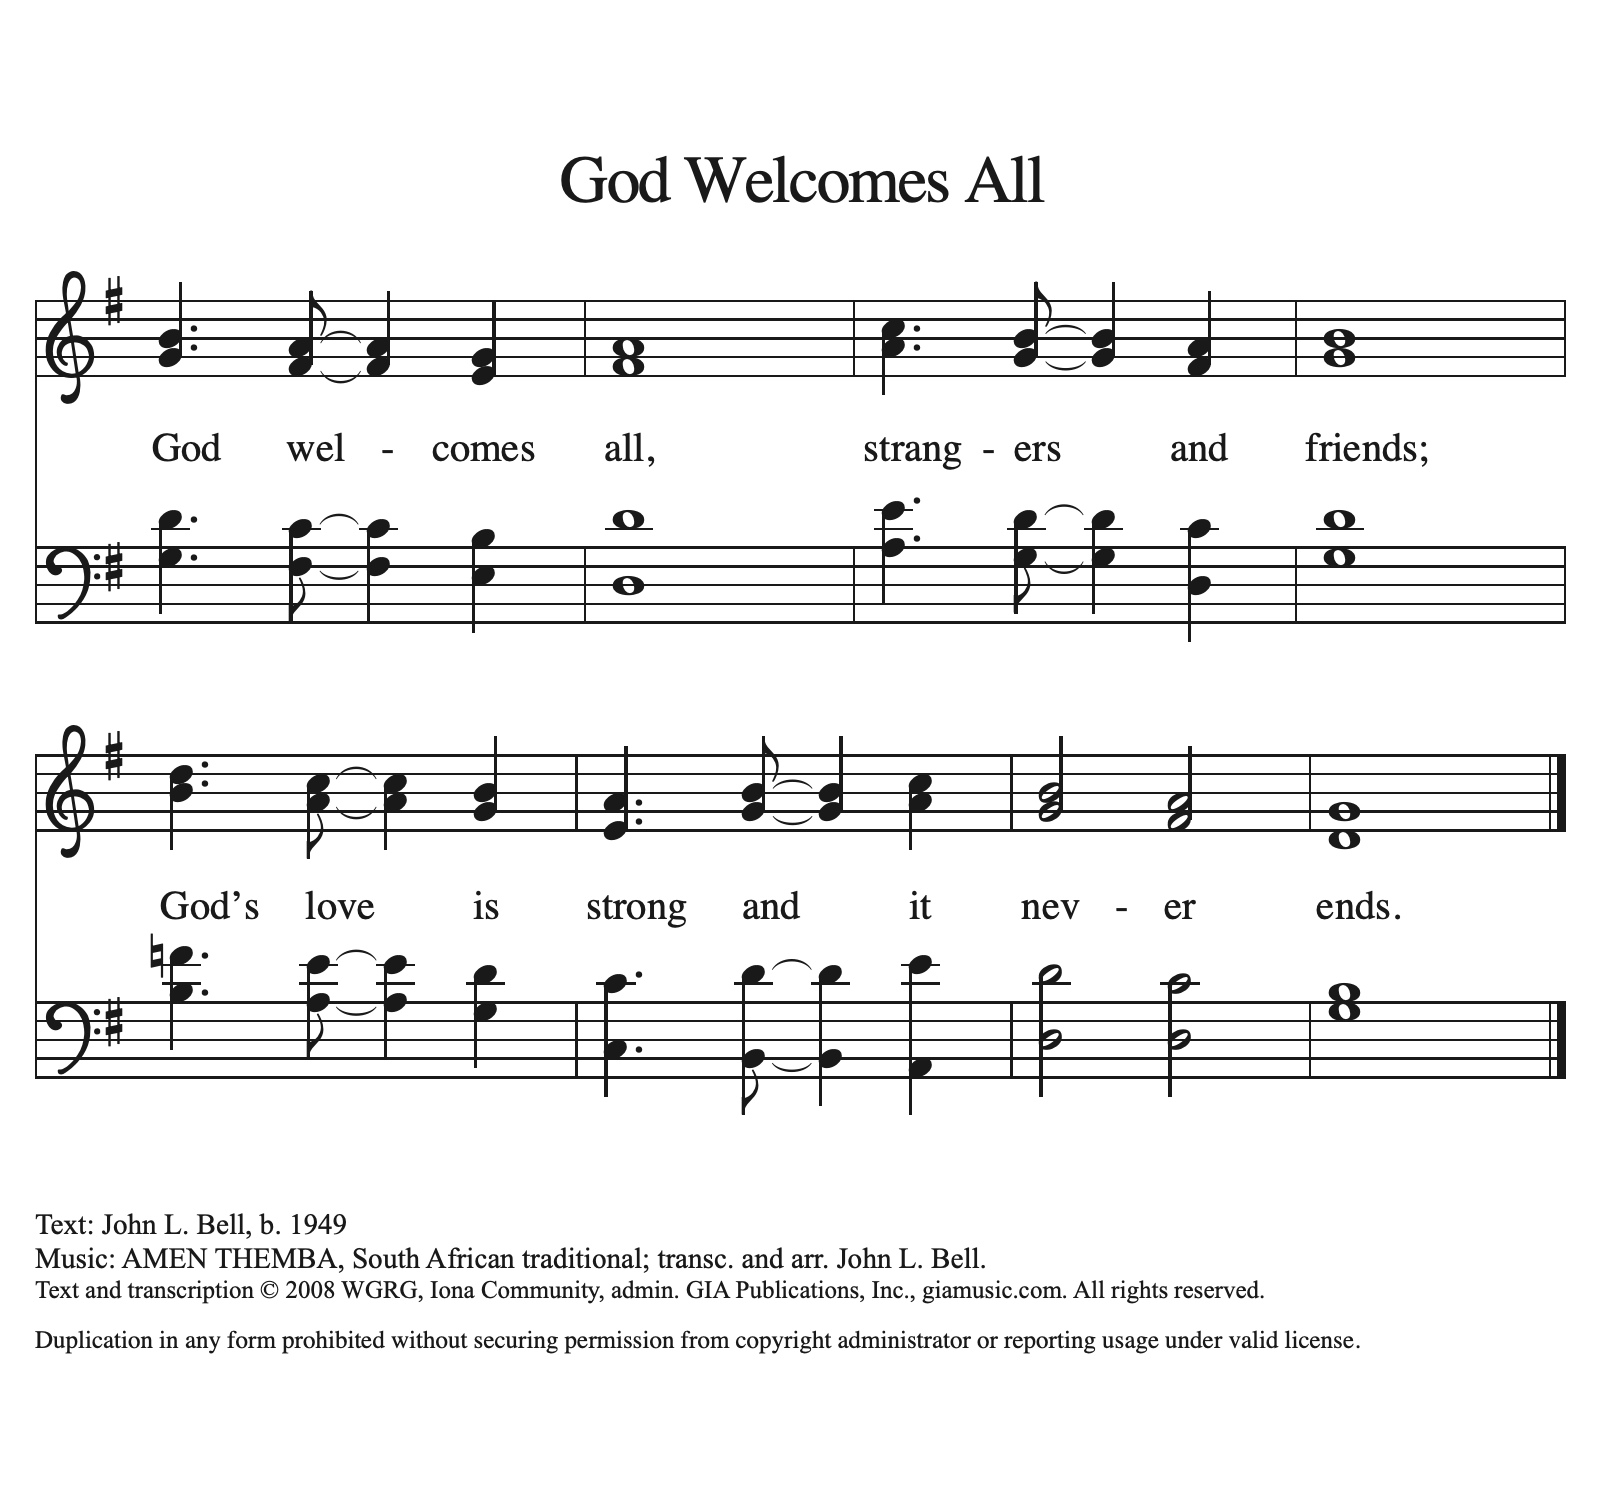 God Welcomes All (Harmony)